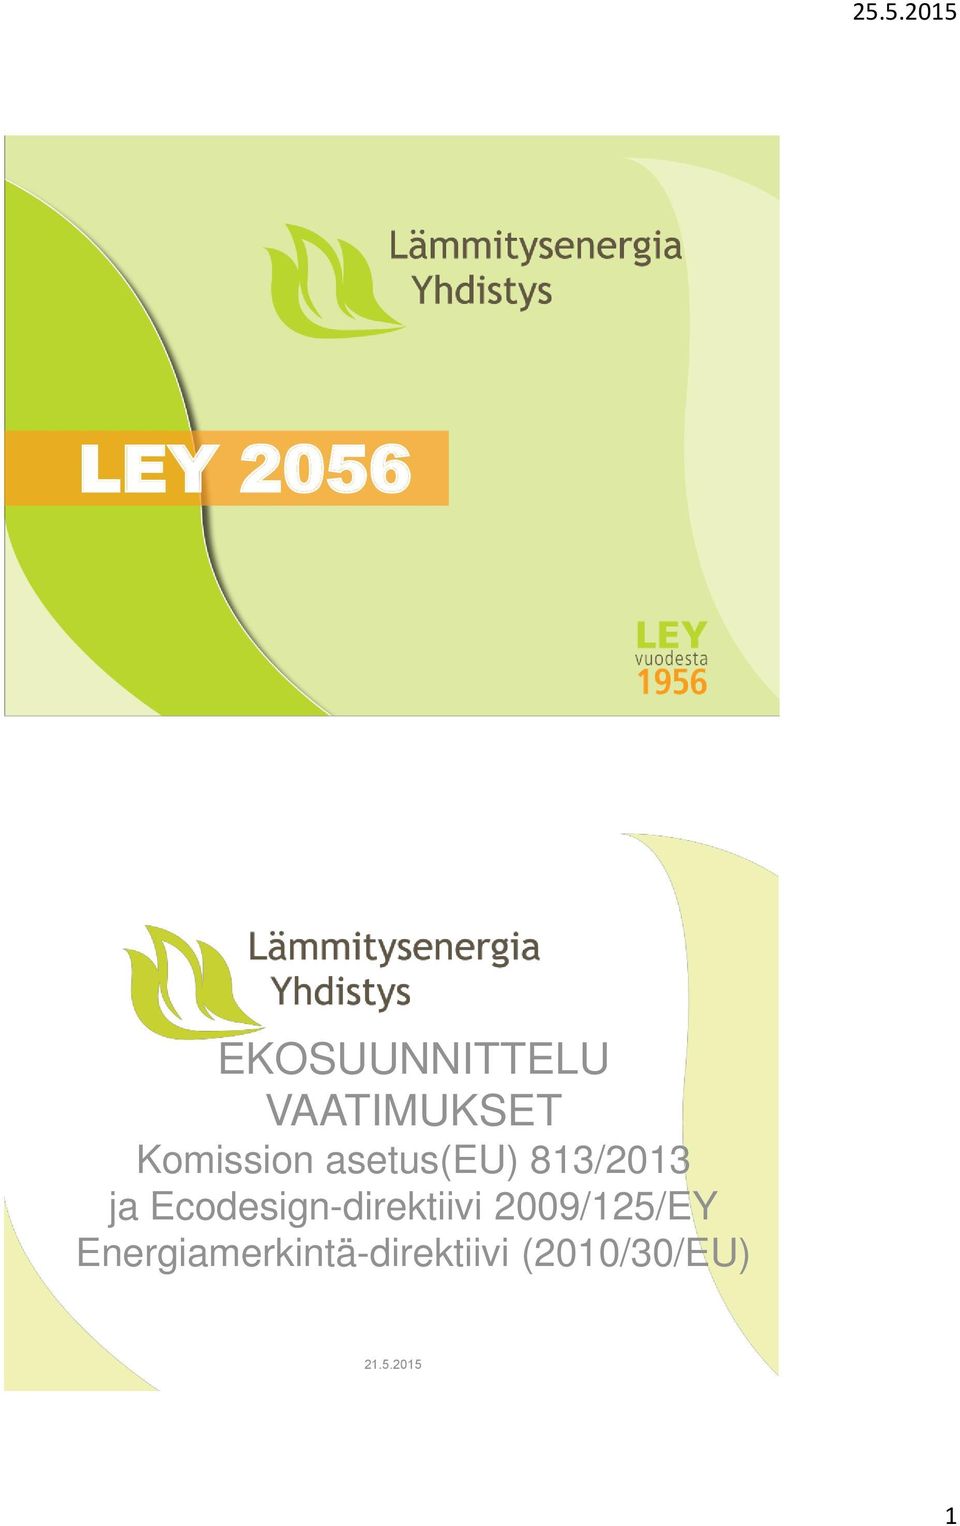 Ecodesign-direktiivi 2009/125/EY